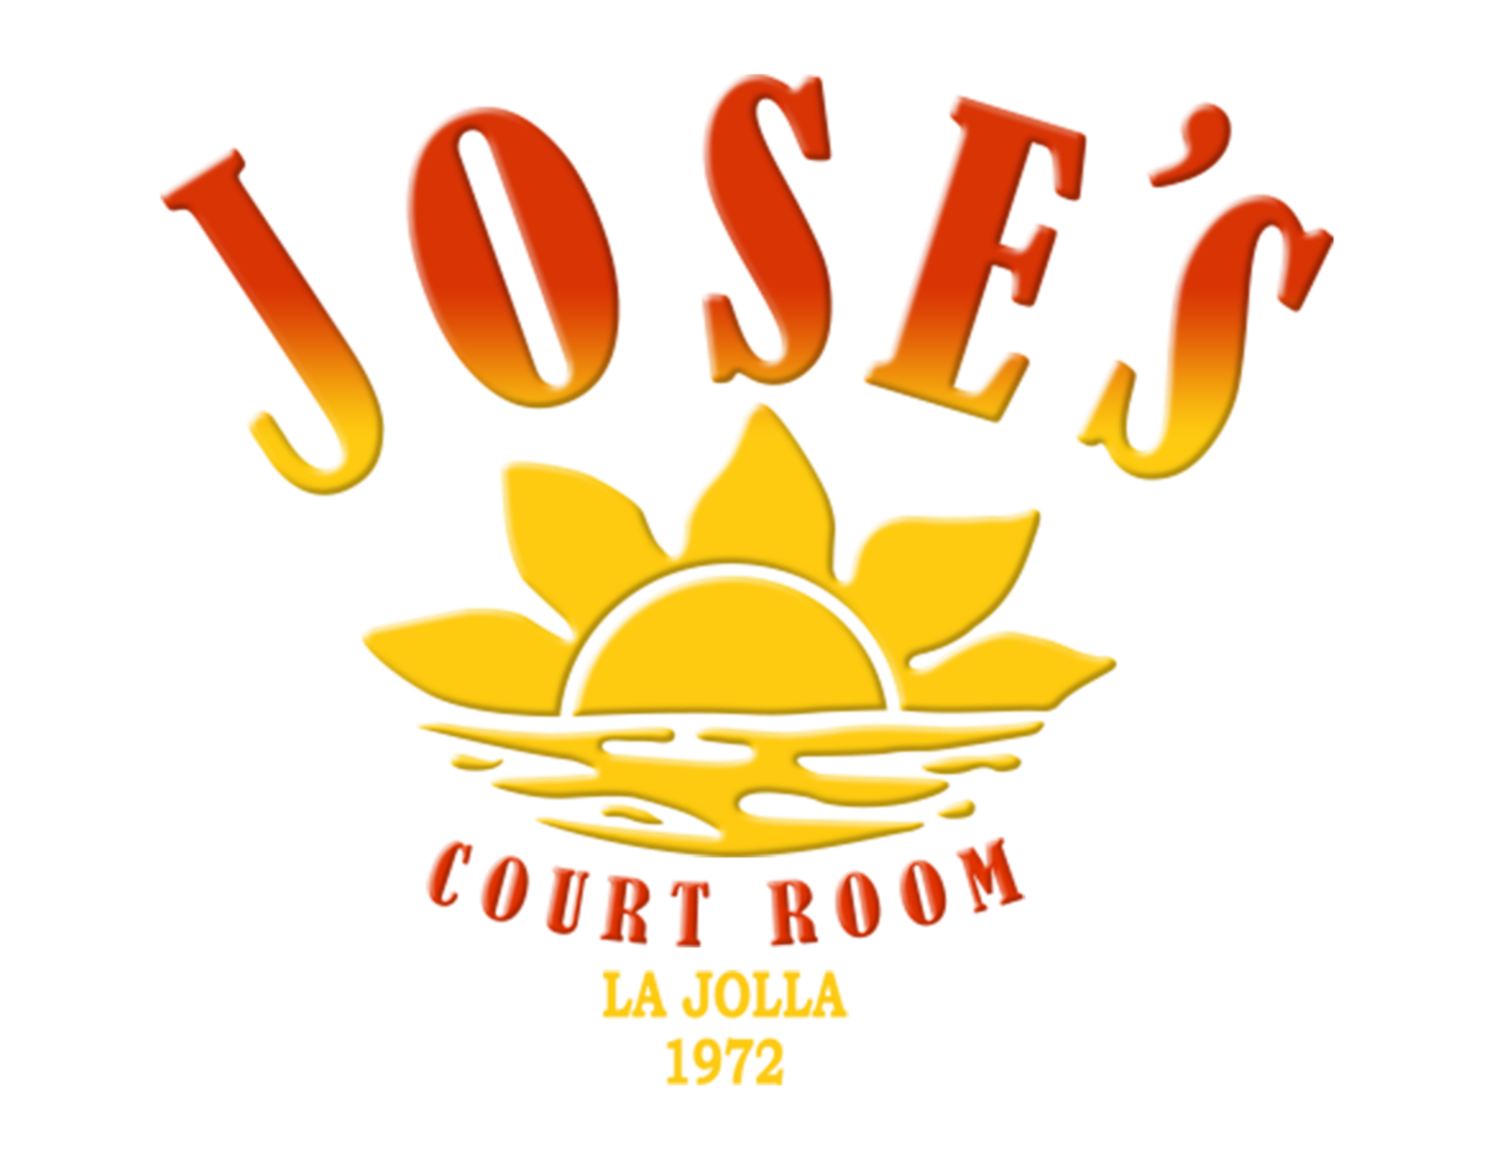 Jose's 